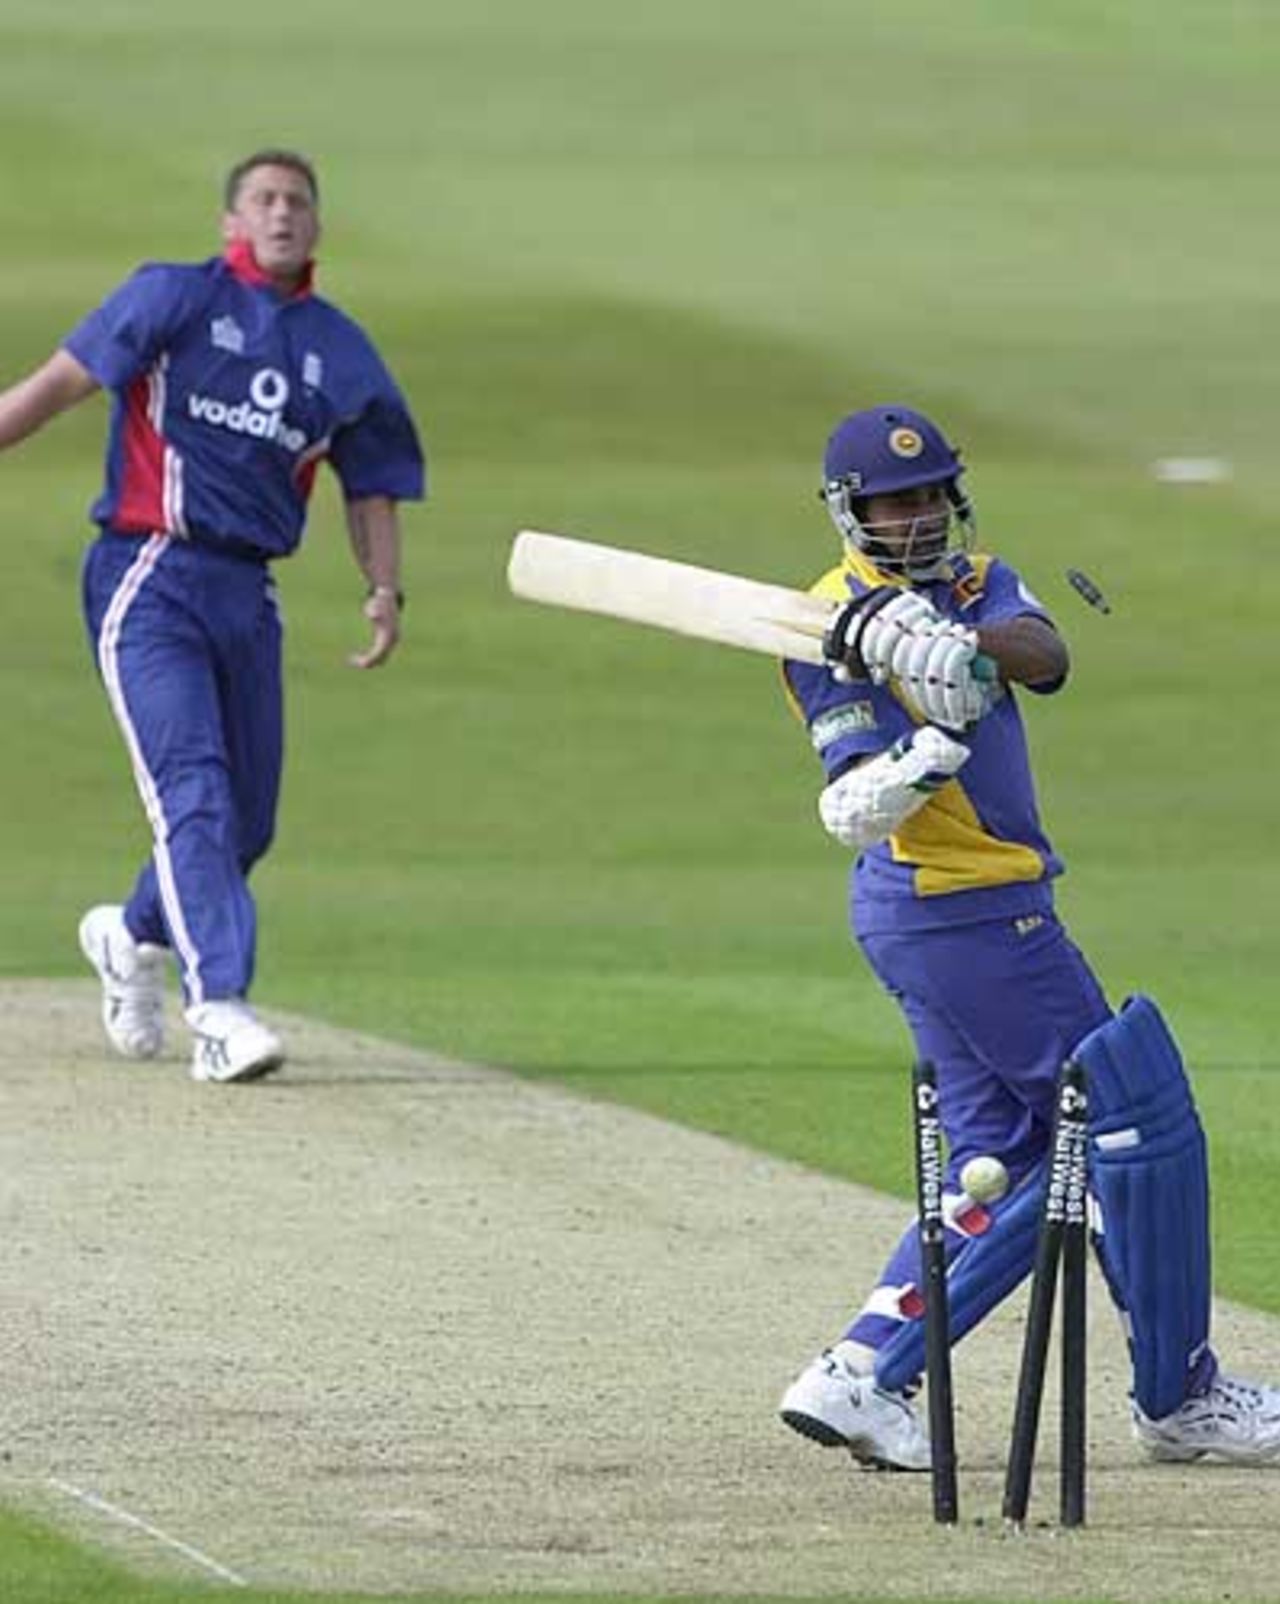 Gough cleans up Vaas for four runs, England v Sri Lanka at Leeds, July 2002